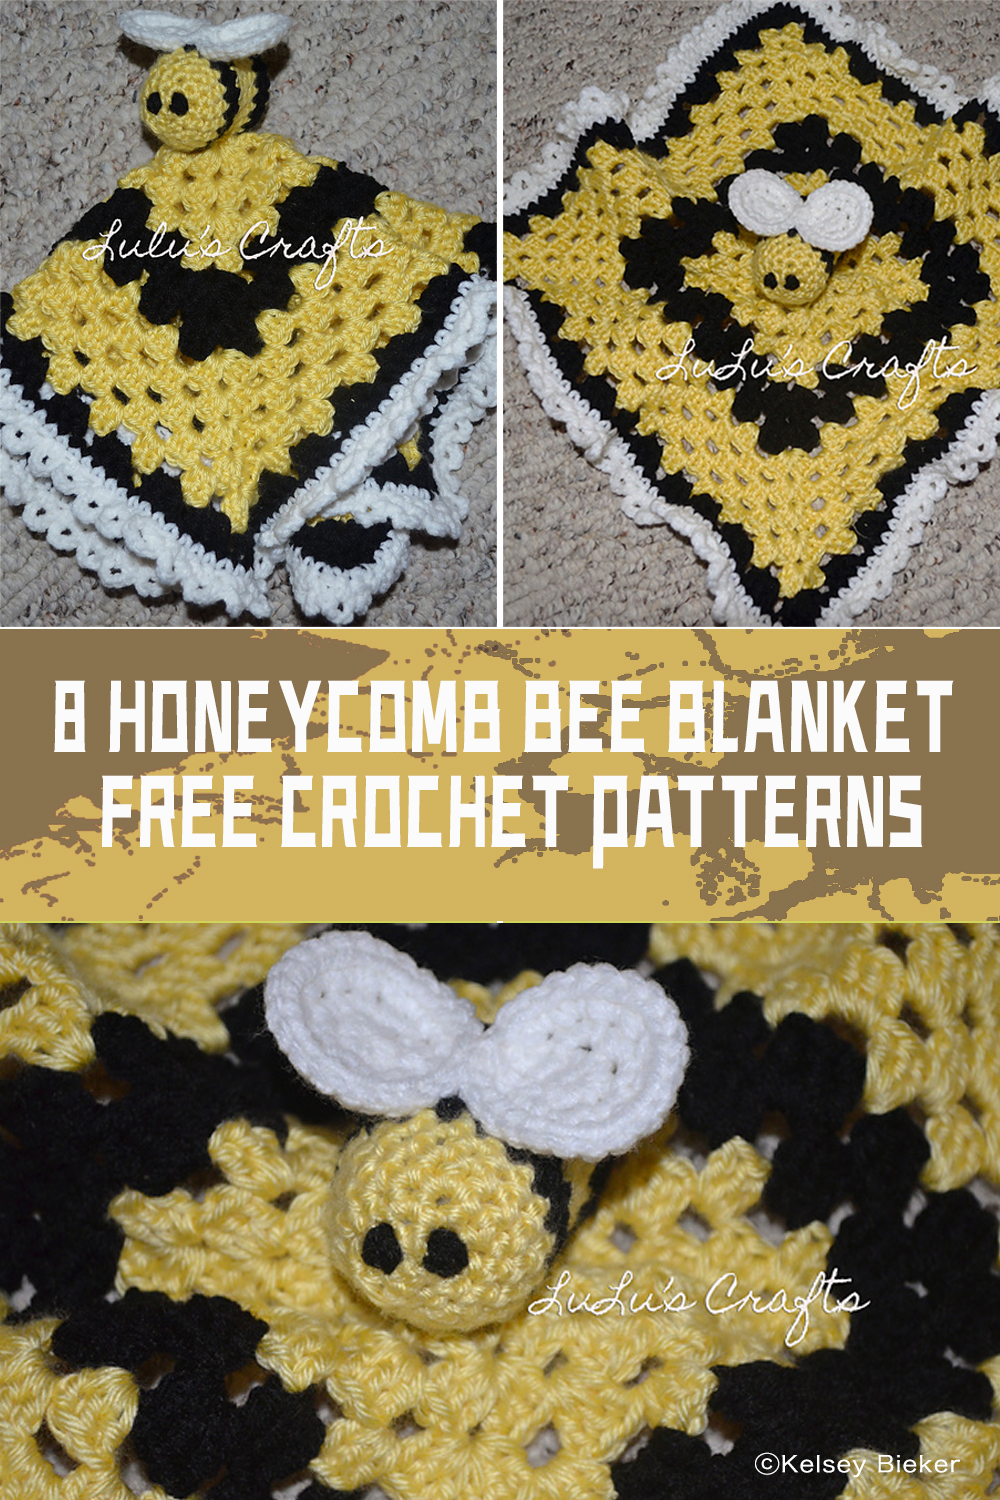 8 Crochet Honeycomb Bee Blanket FREE Patterns